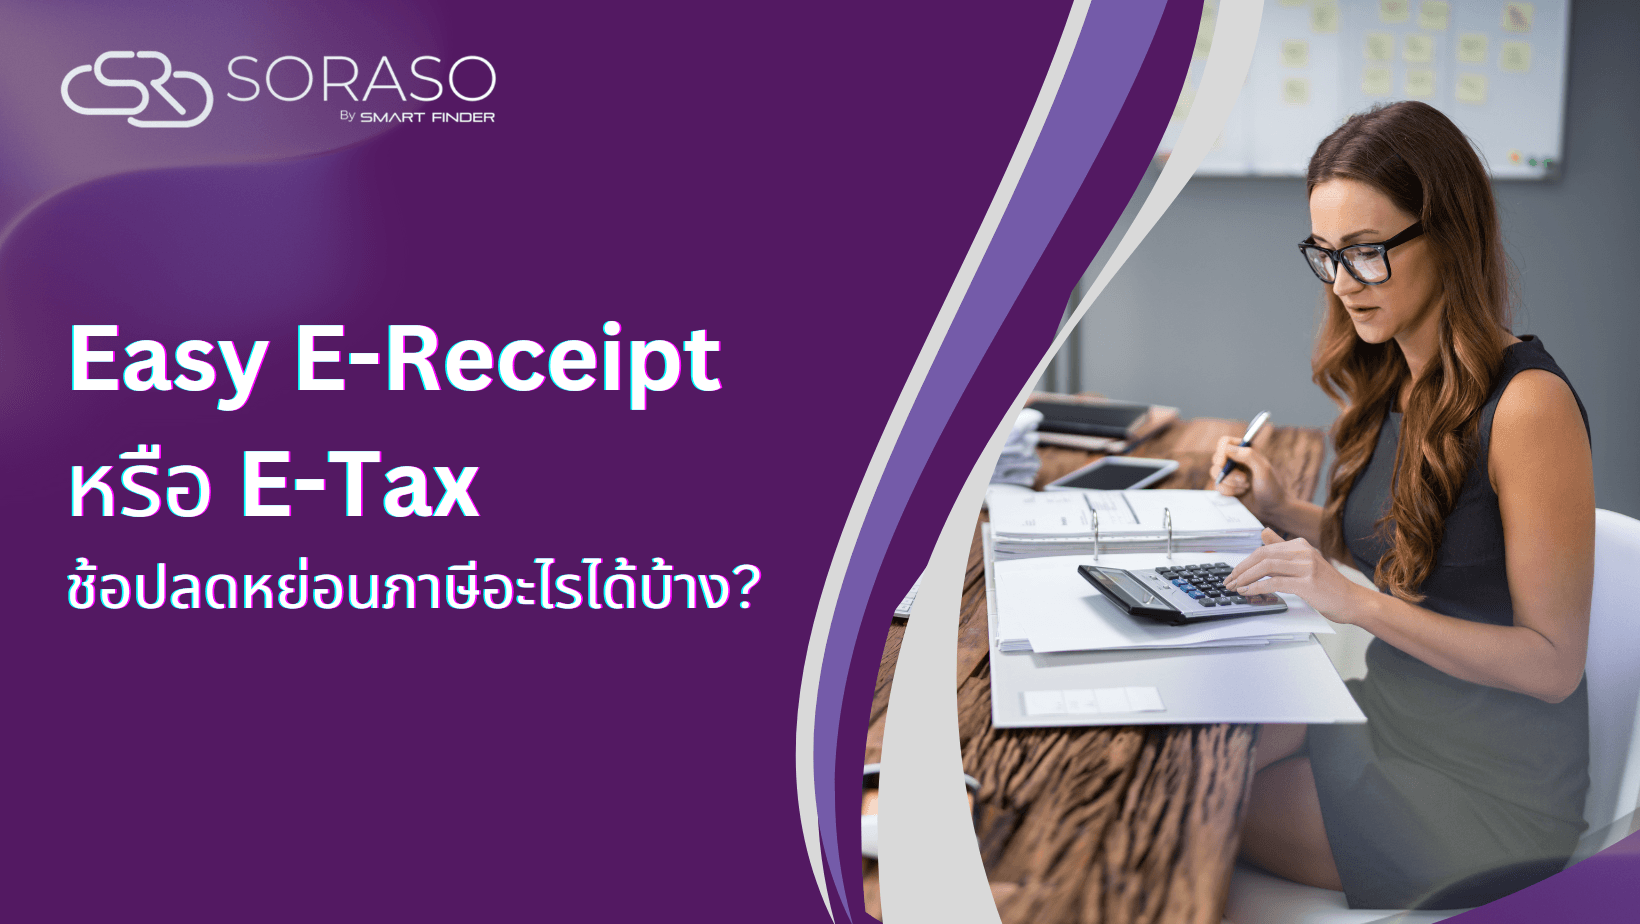 Easy E-Receipt หรือ E-Tax ช้อปลดหย่อนภาษีอะไรได้บ้าง